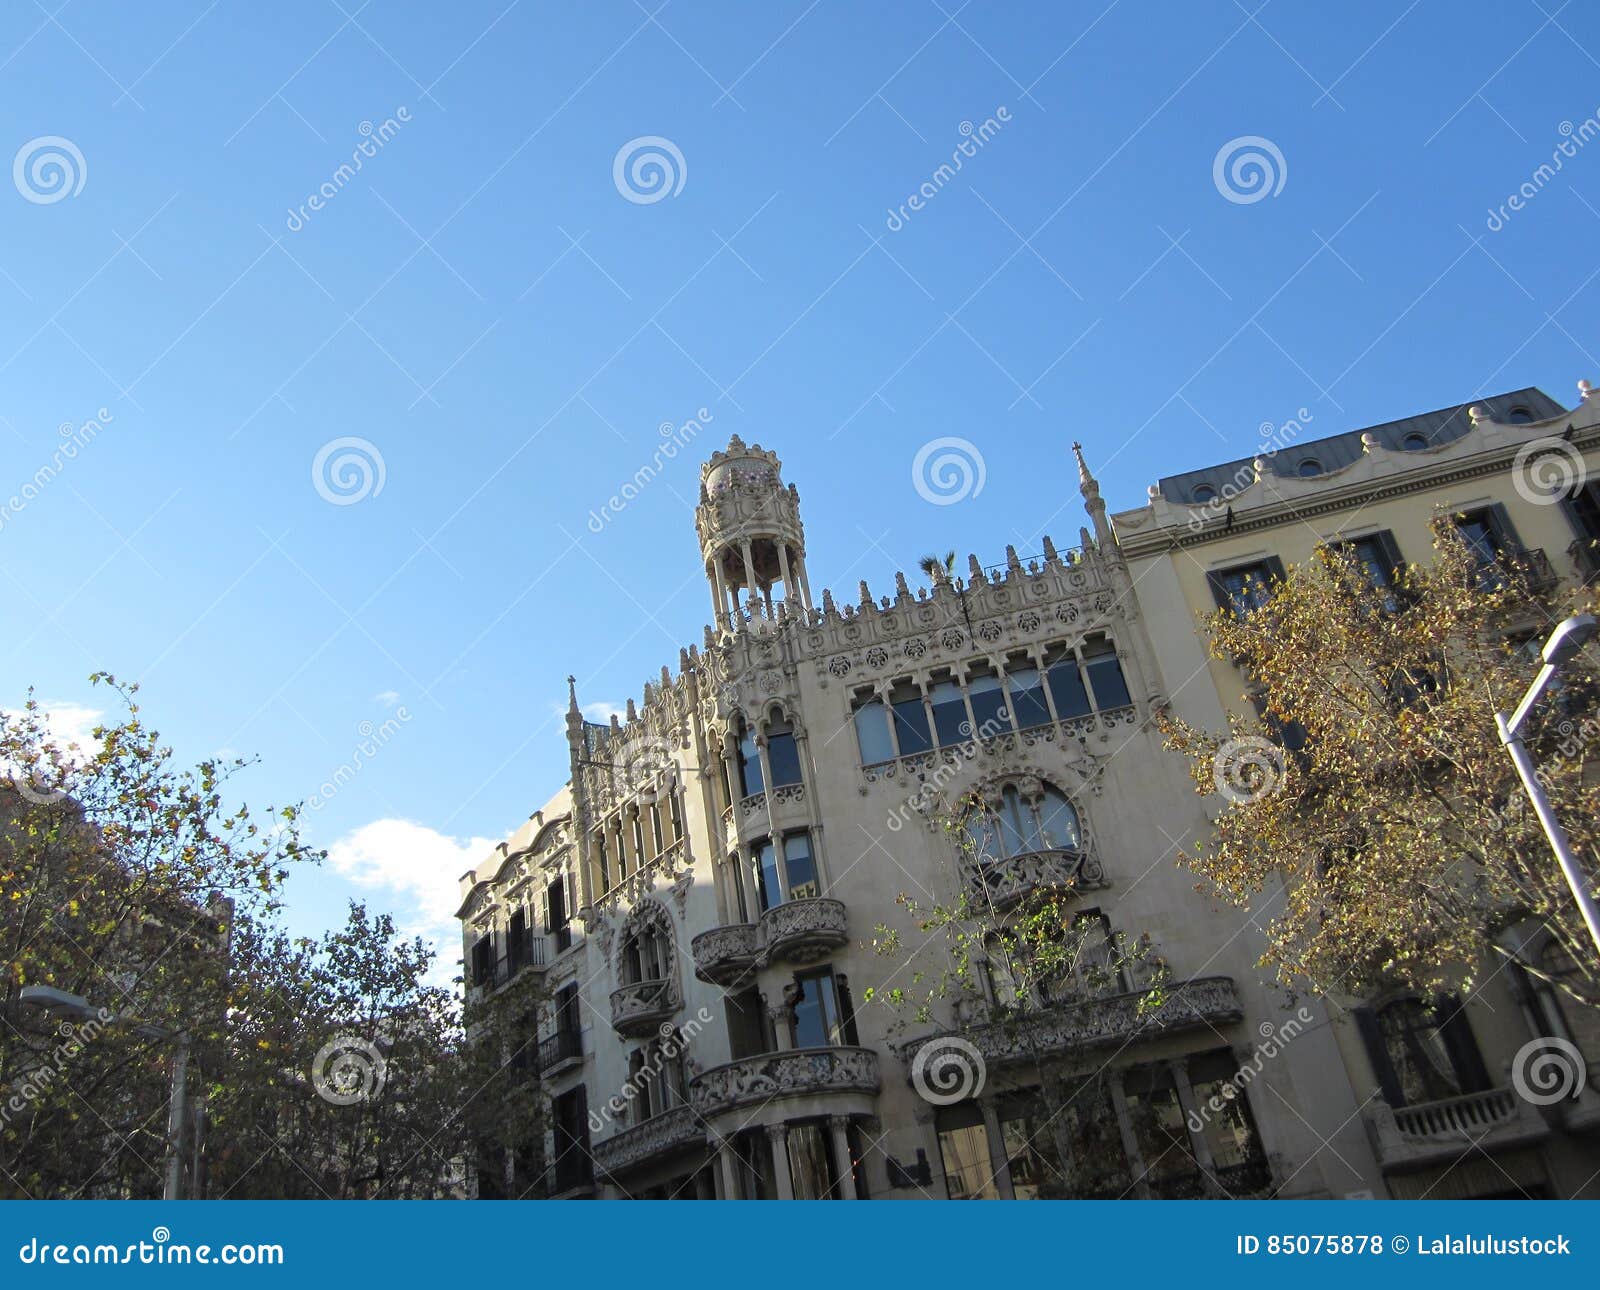 Barcelona Famous Building stock photo. Image of landscape - 85075878